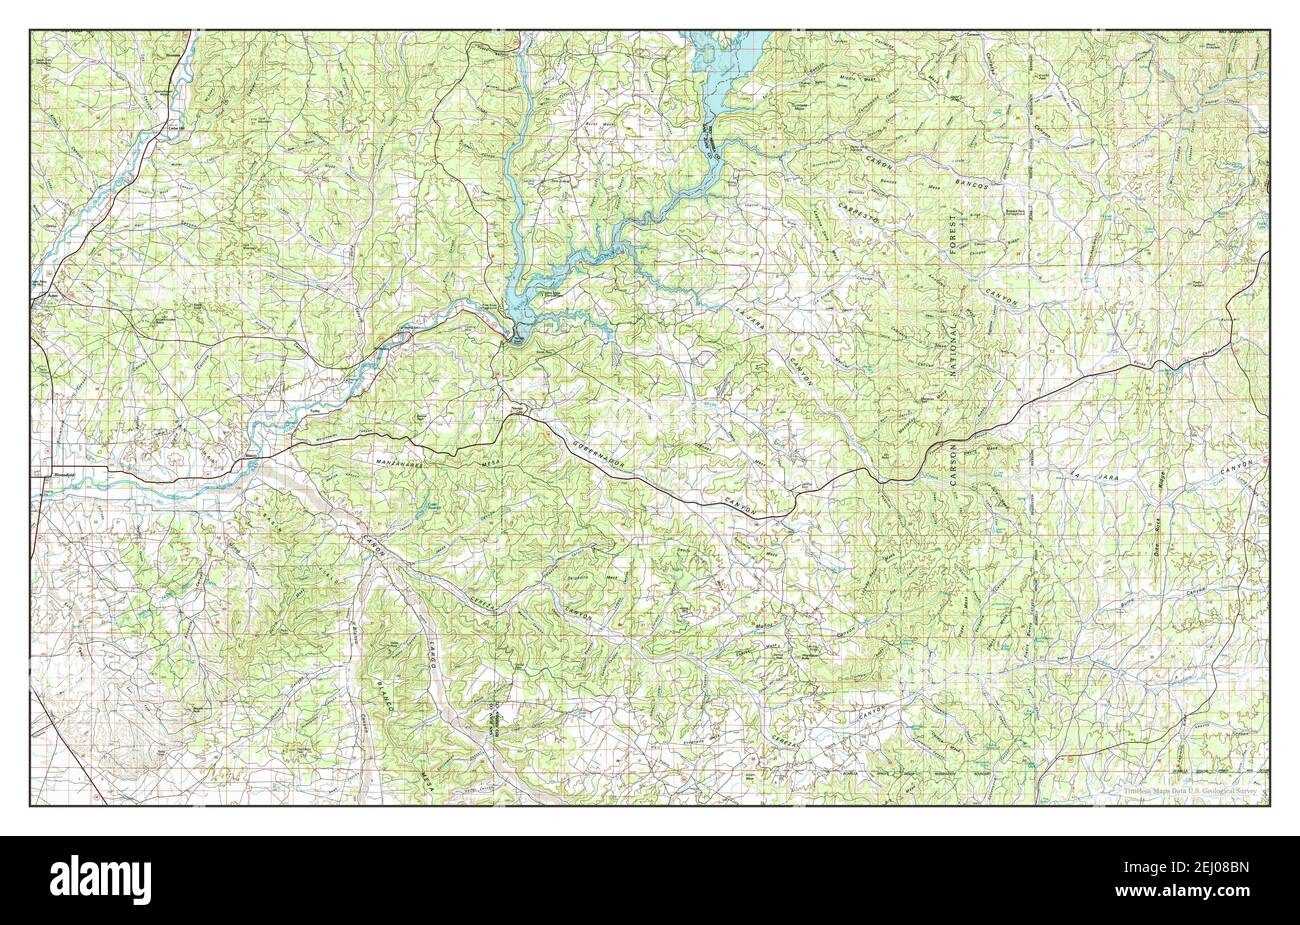 New Mexico USGS Topographic Map NAVAJO RESERVOIR 1980-100K 